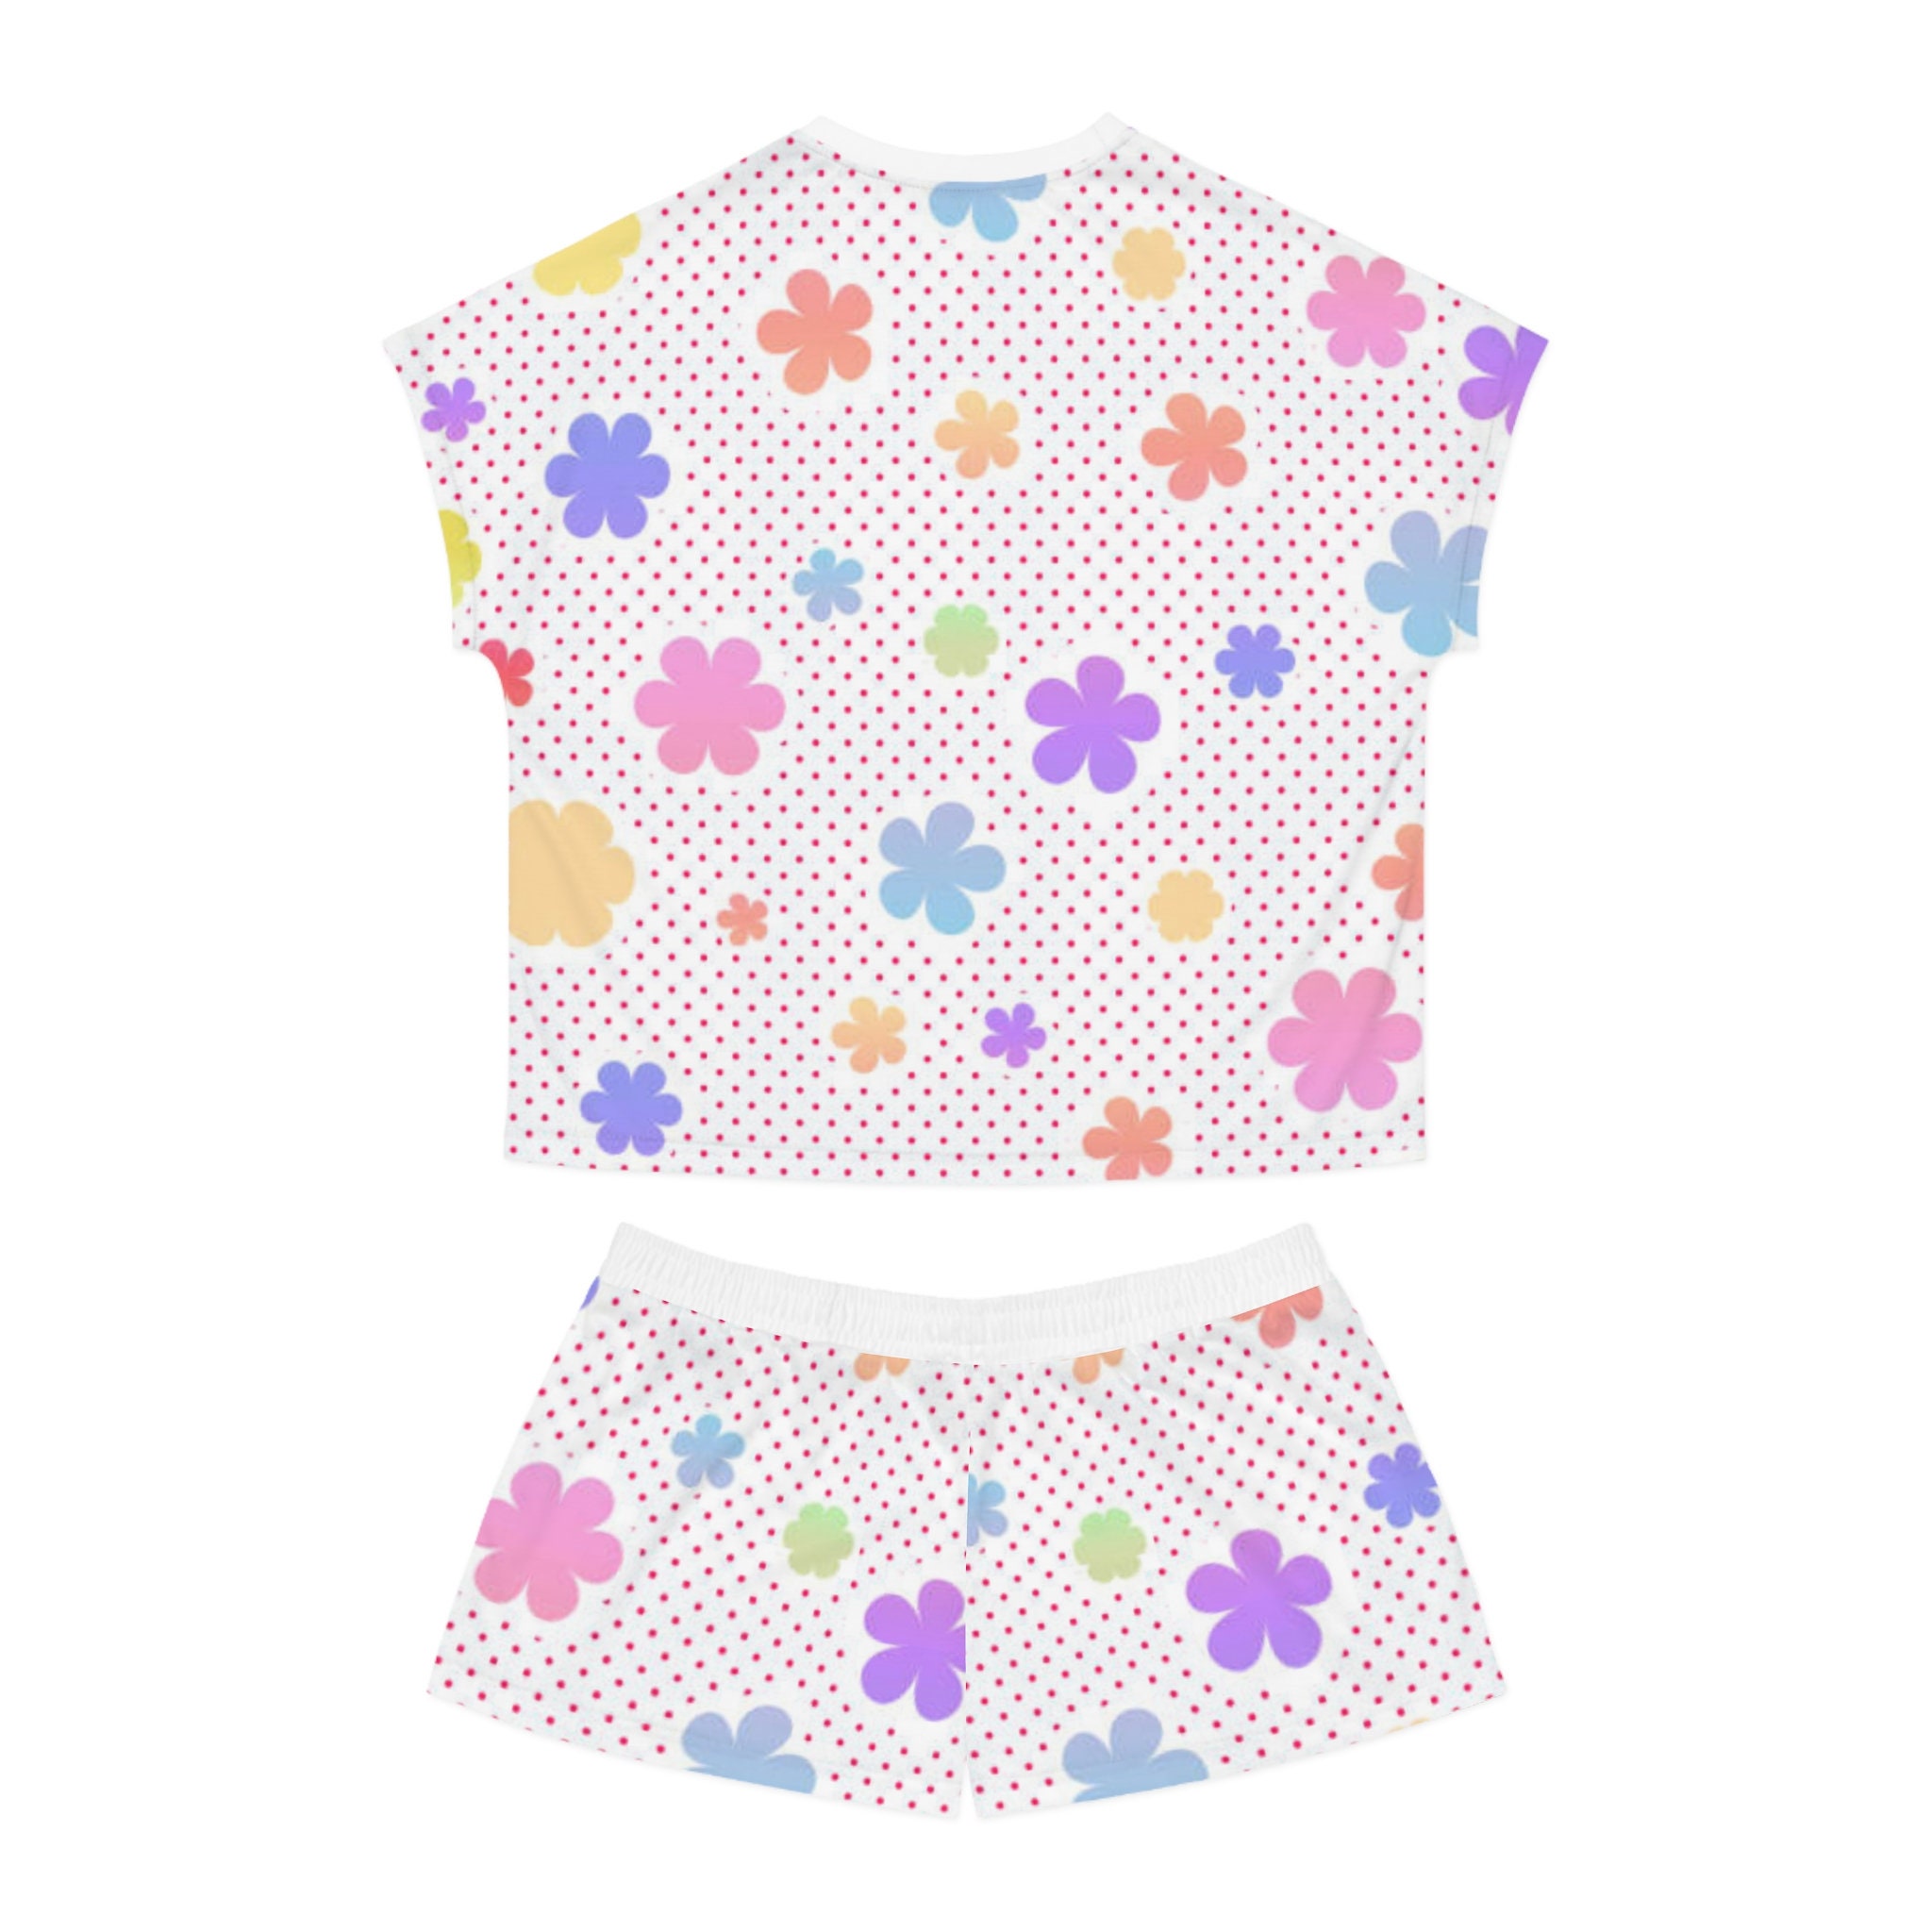 Colorful Flower Pajamas Set, Women Sleepwear